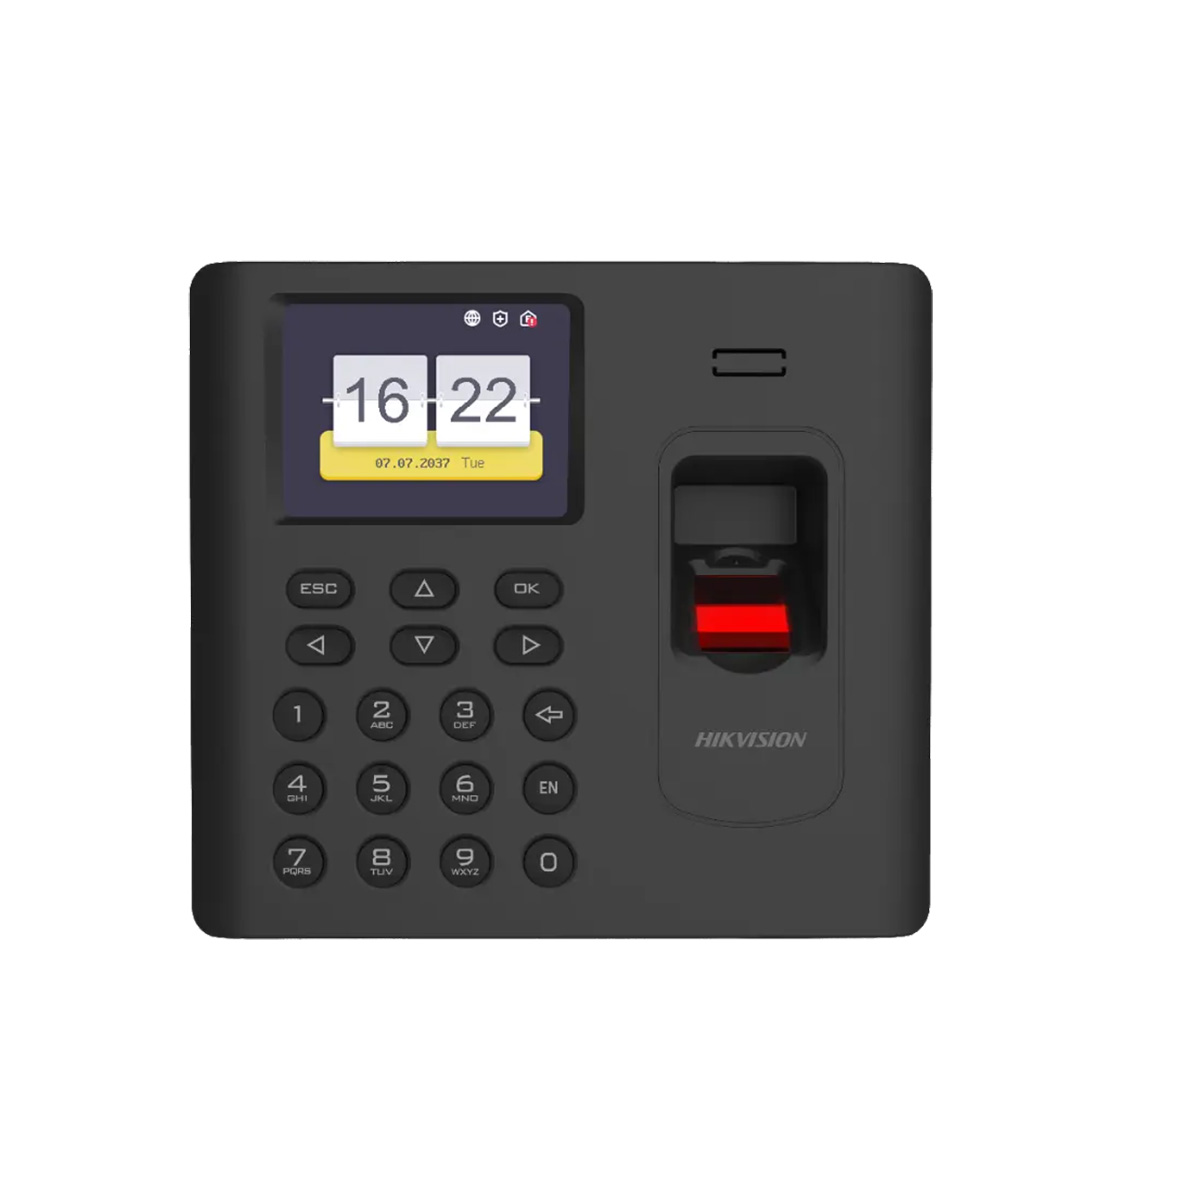 Hikvision K1A802 Pro Series Fingerprint Time Attendance Terminal – DS-K1A802AMF